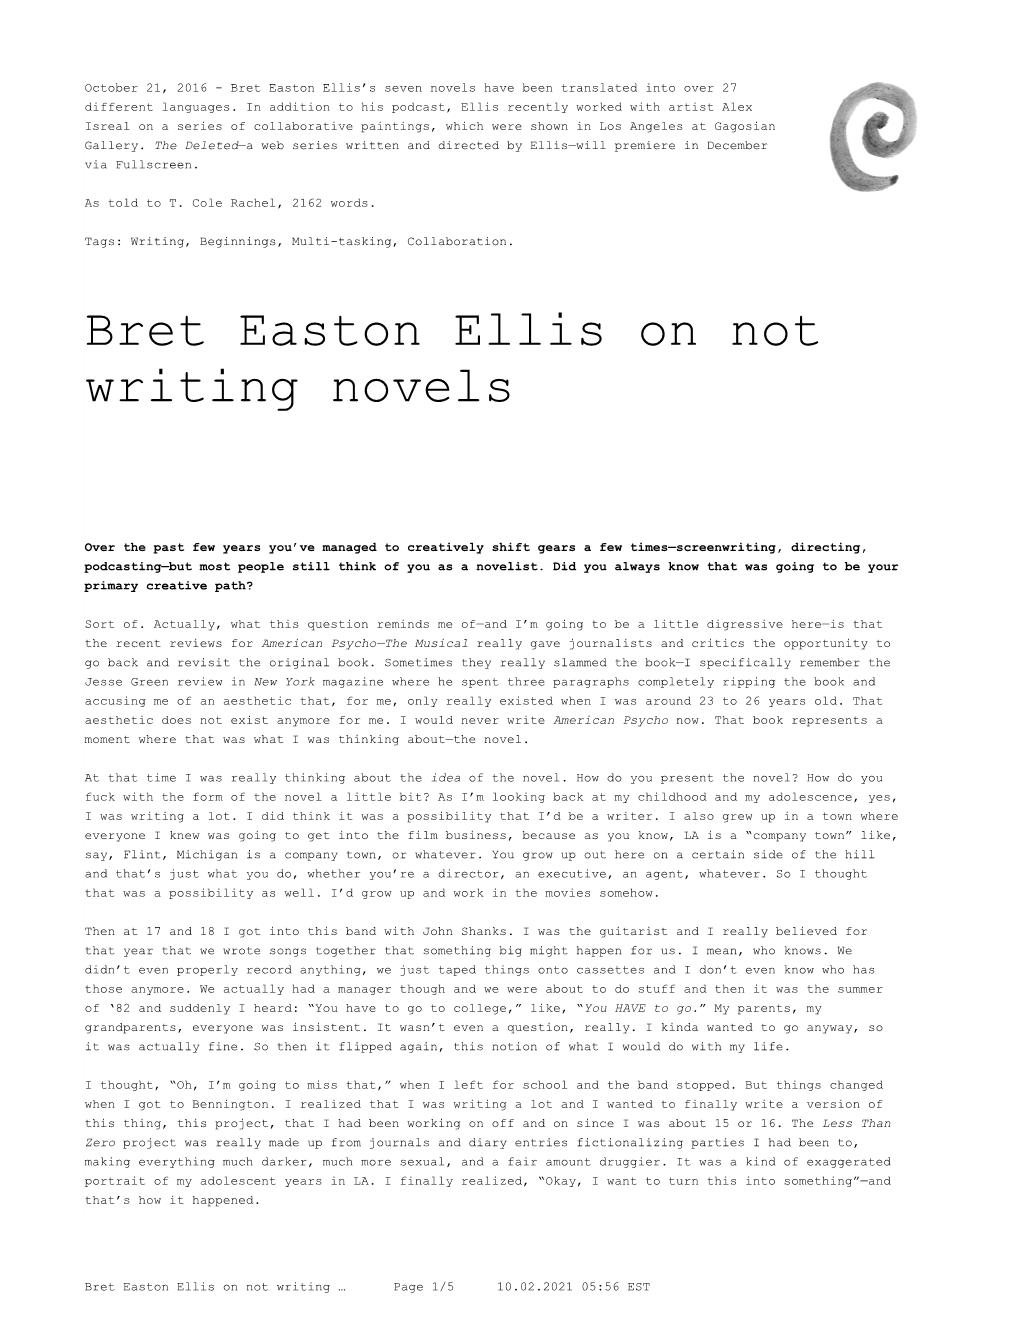 Bret Easton Ellis on Not Writing Novels